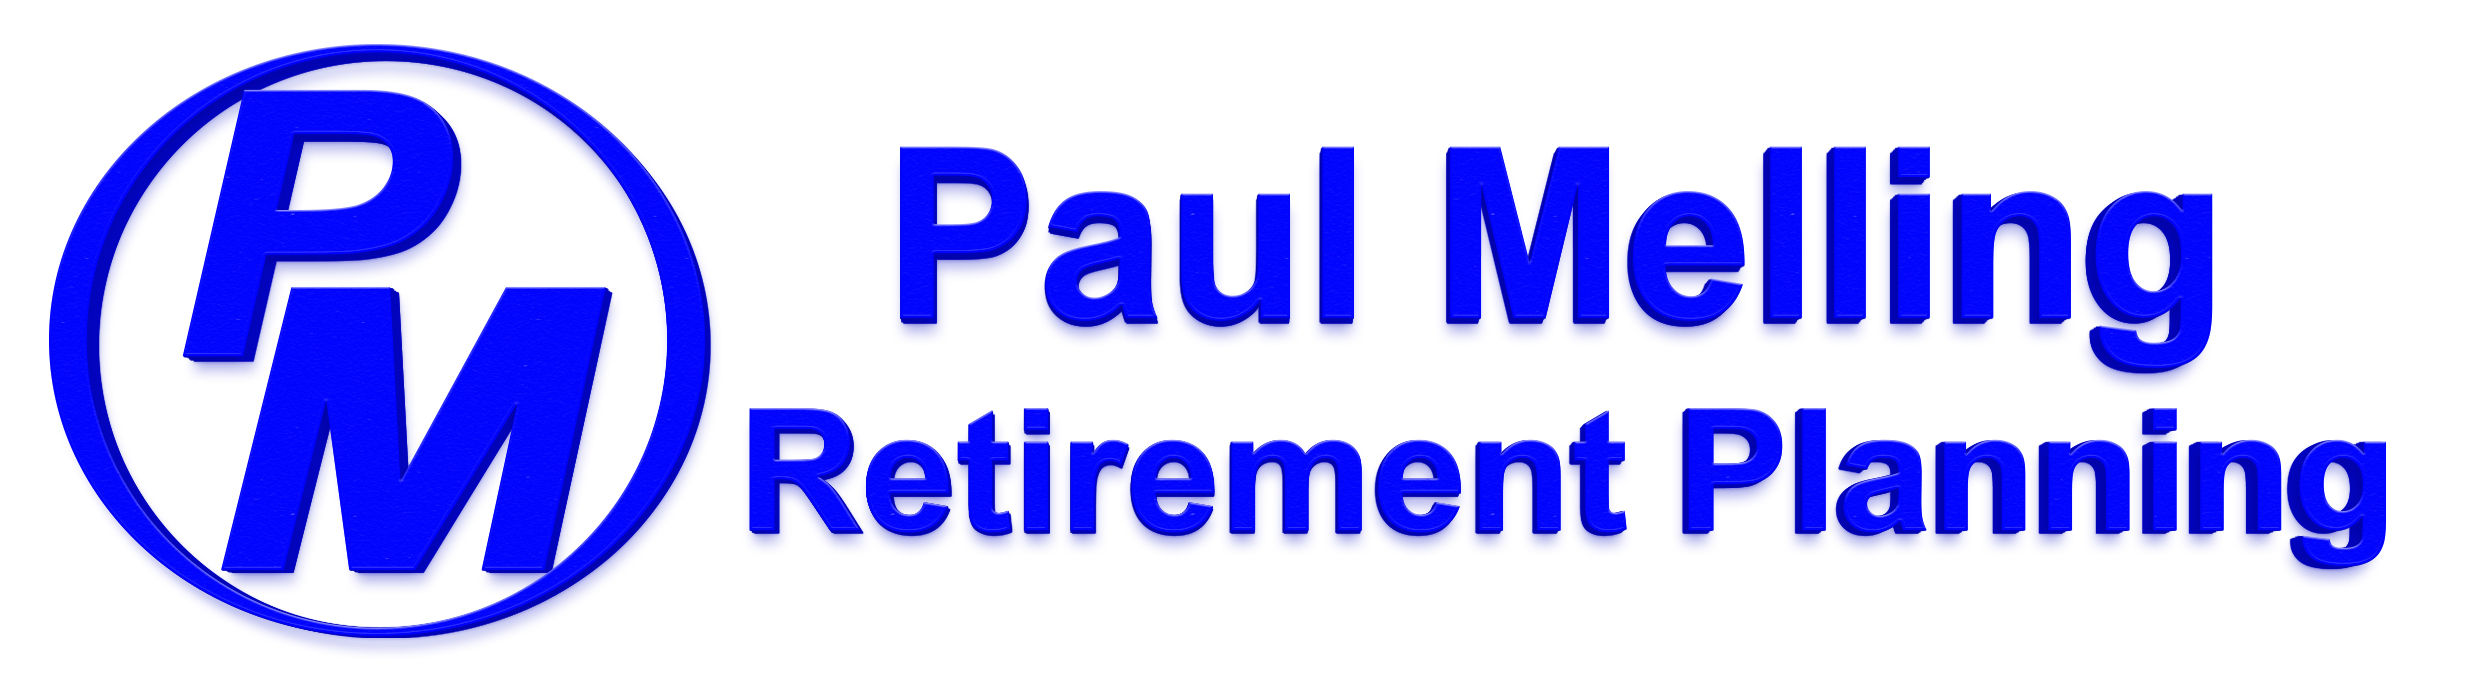 Paul Melling Retirement Planning logo